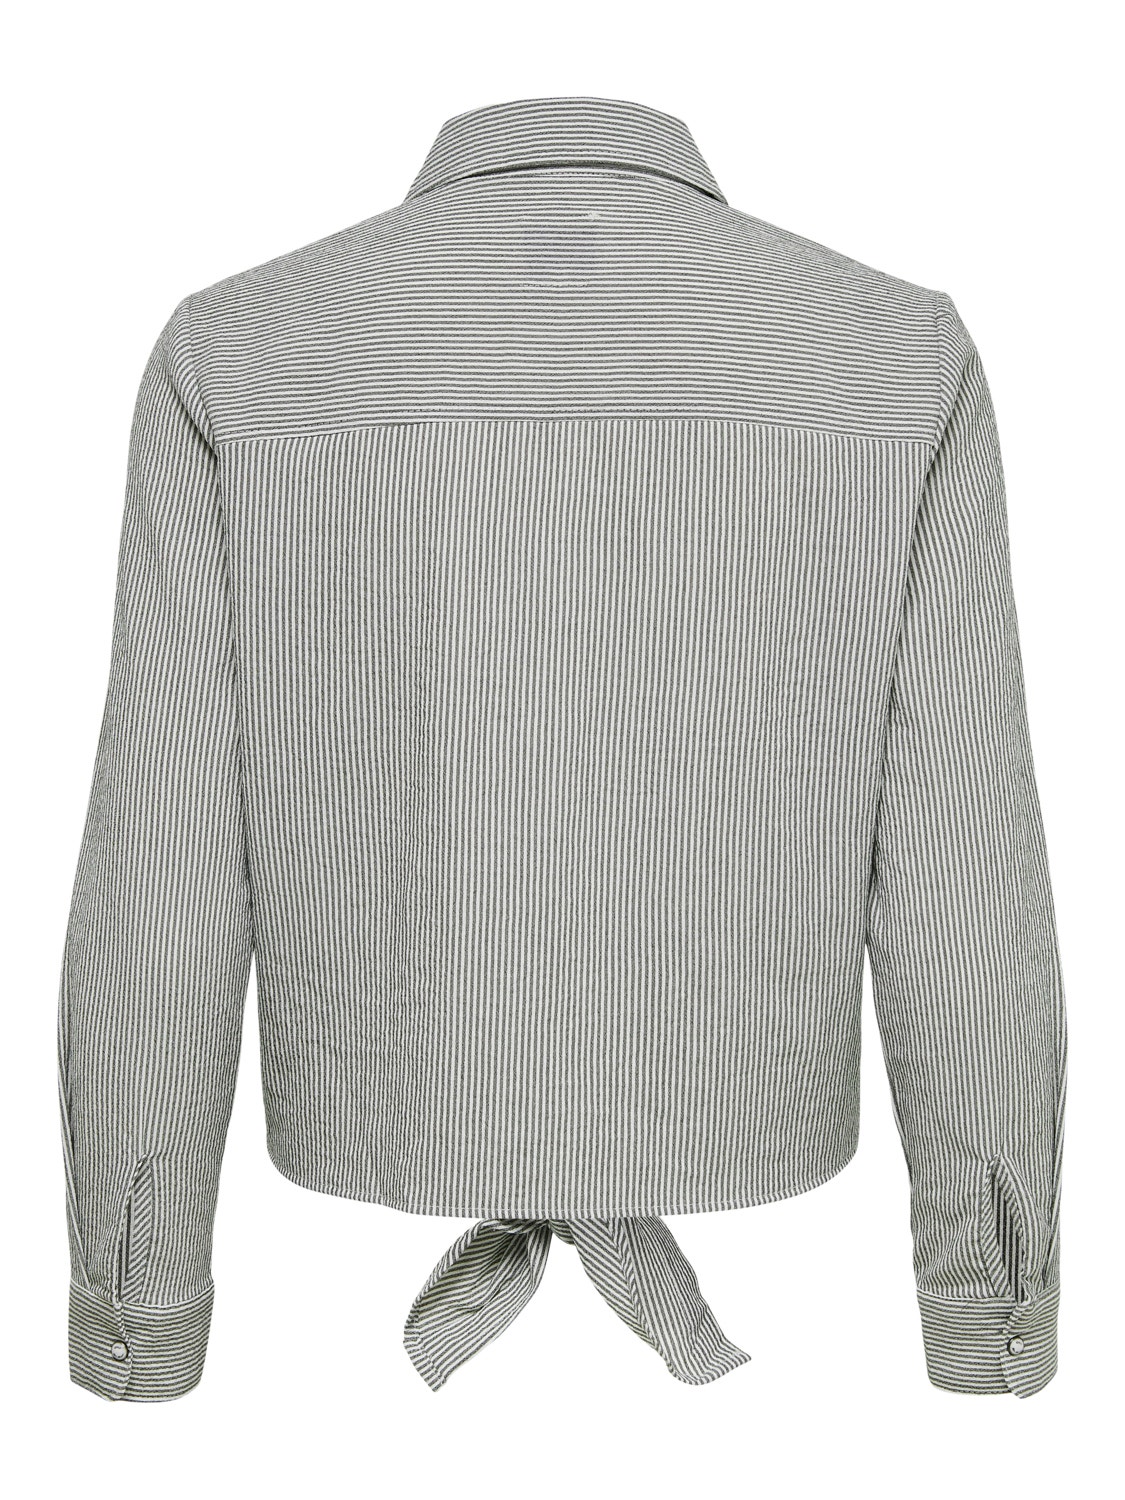 ONLY Strikdetail Overhemd -Kalamata - 15195910